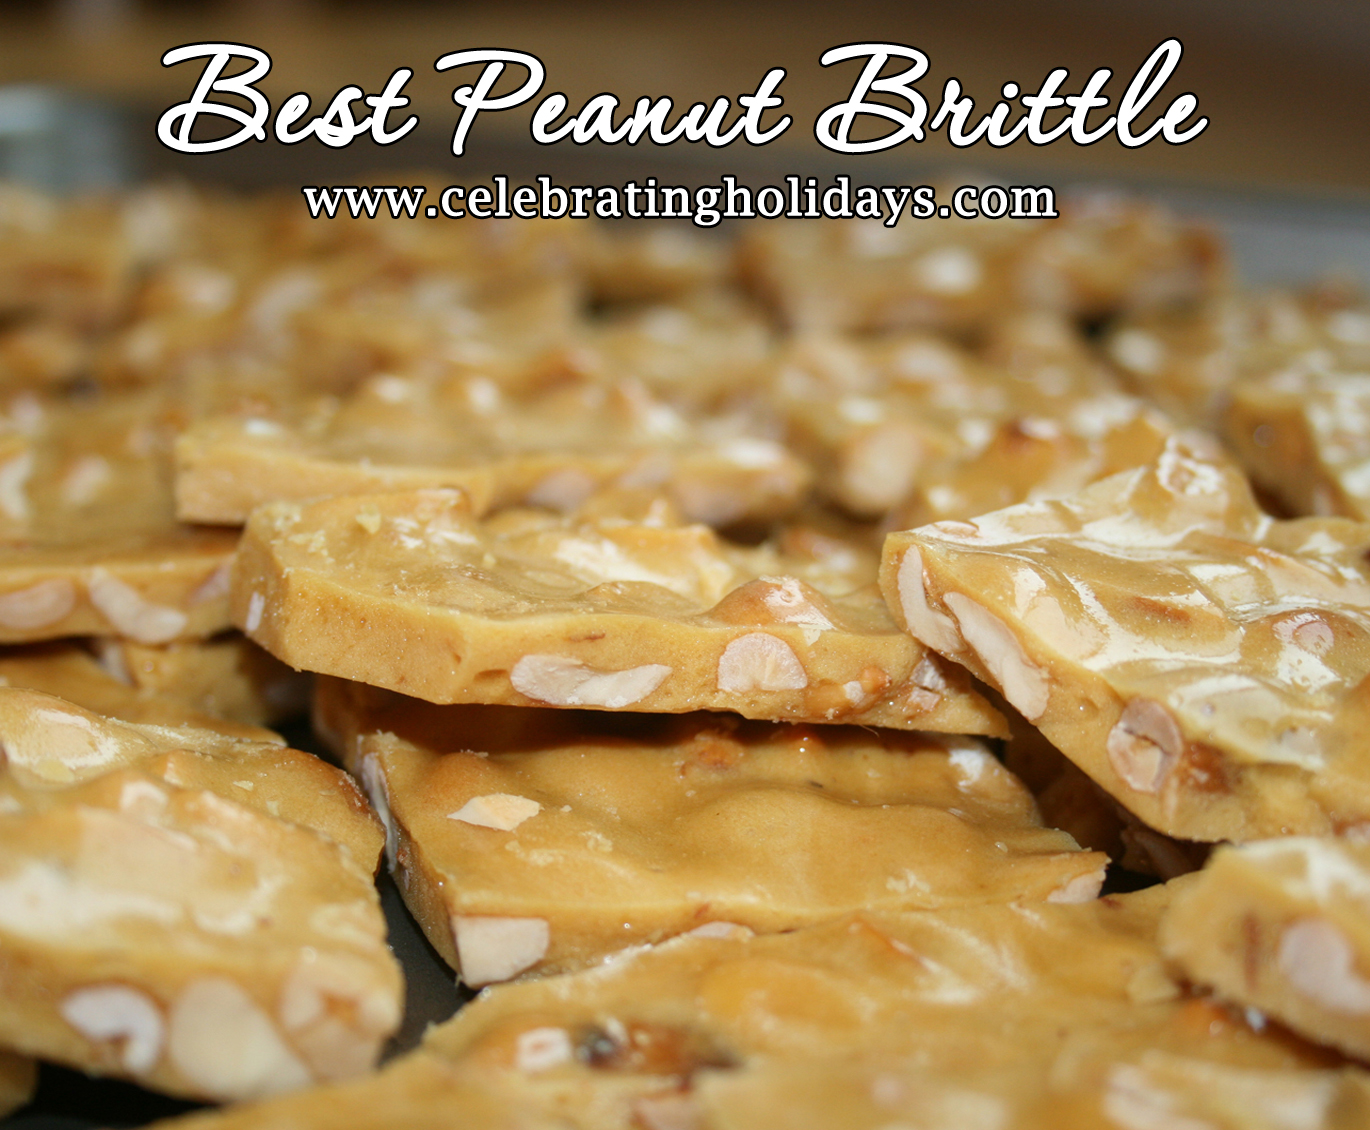 The Best Peanut Brittle Recipe